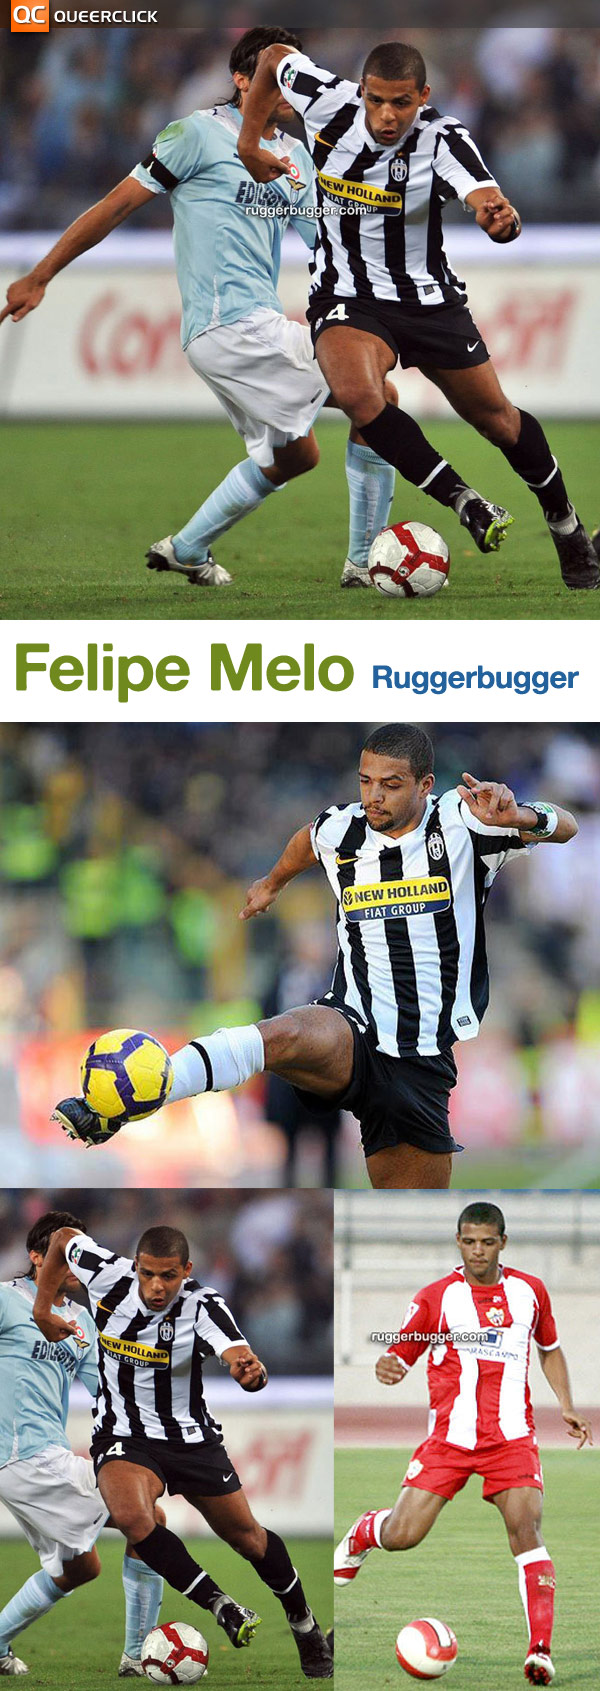 Felipe Melo at Ruggerbugger